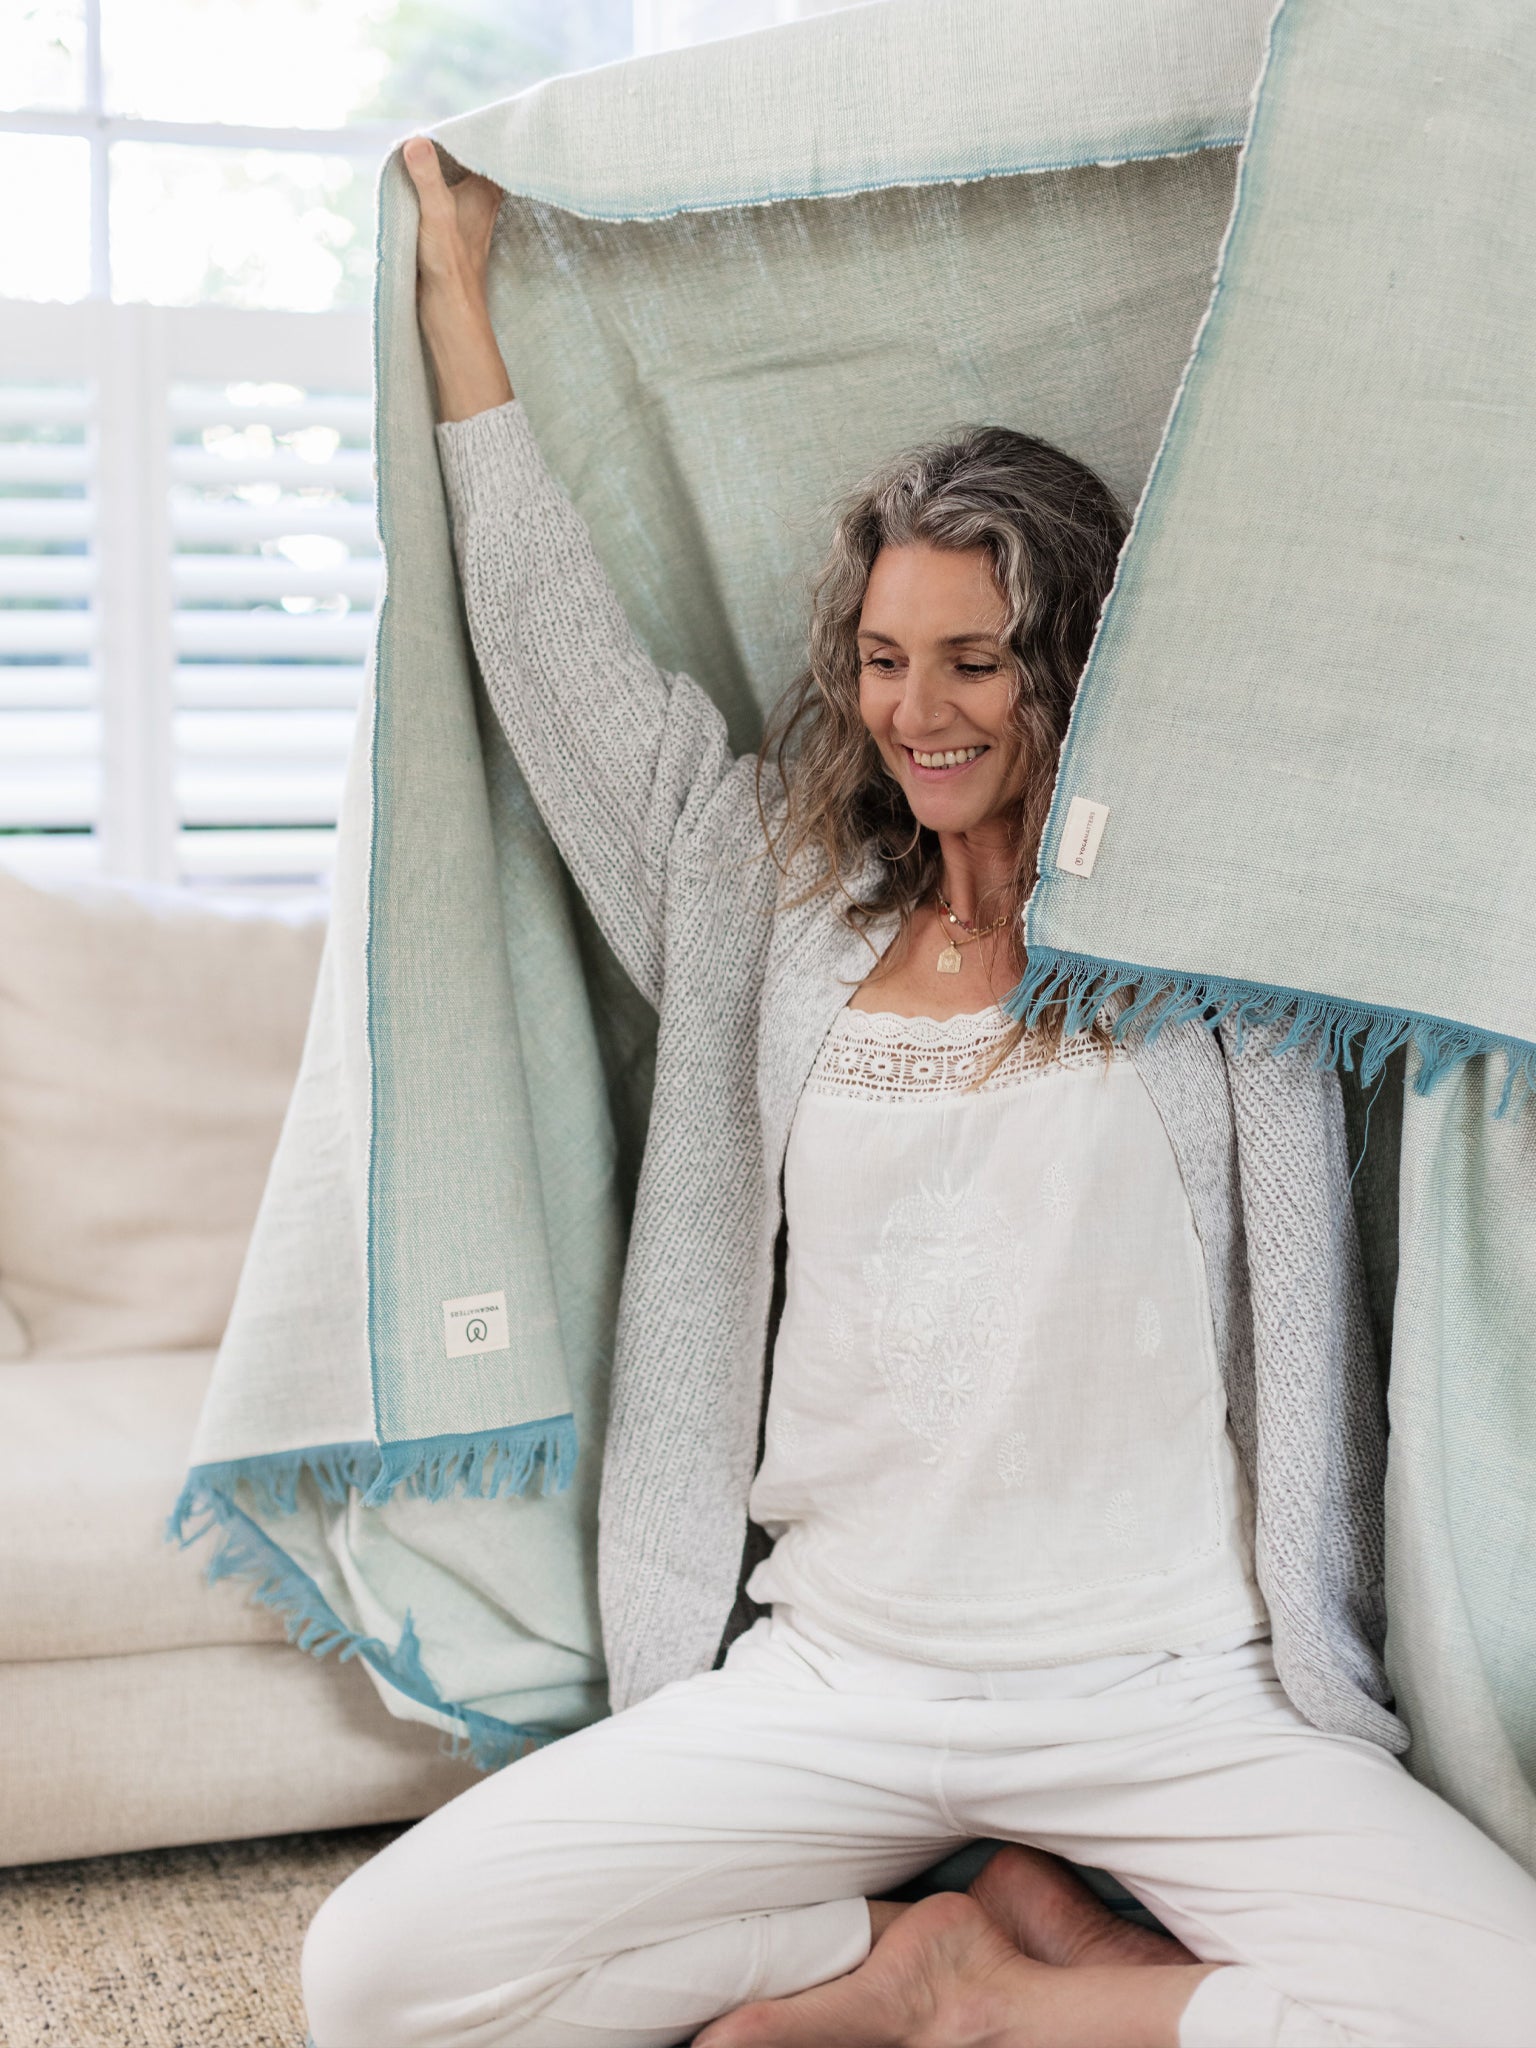 Buy Yoga Meditation Blanket Online Made With 100% Soft Cotton